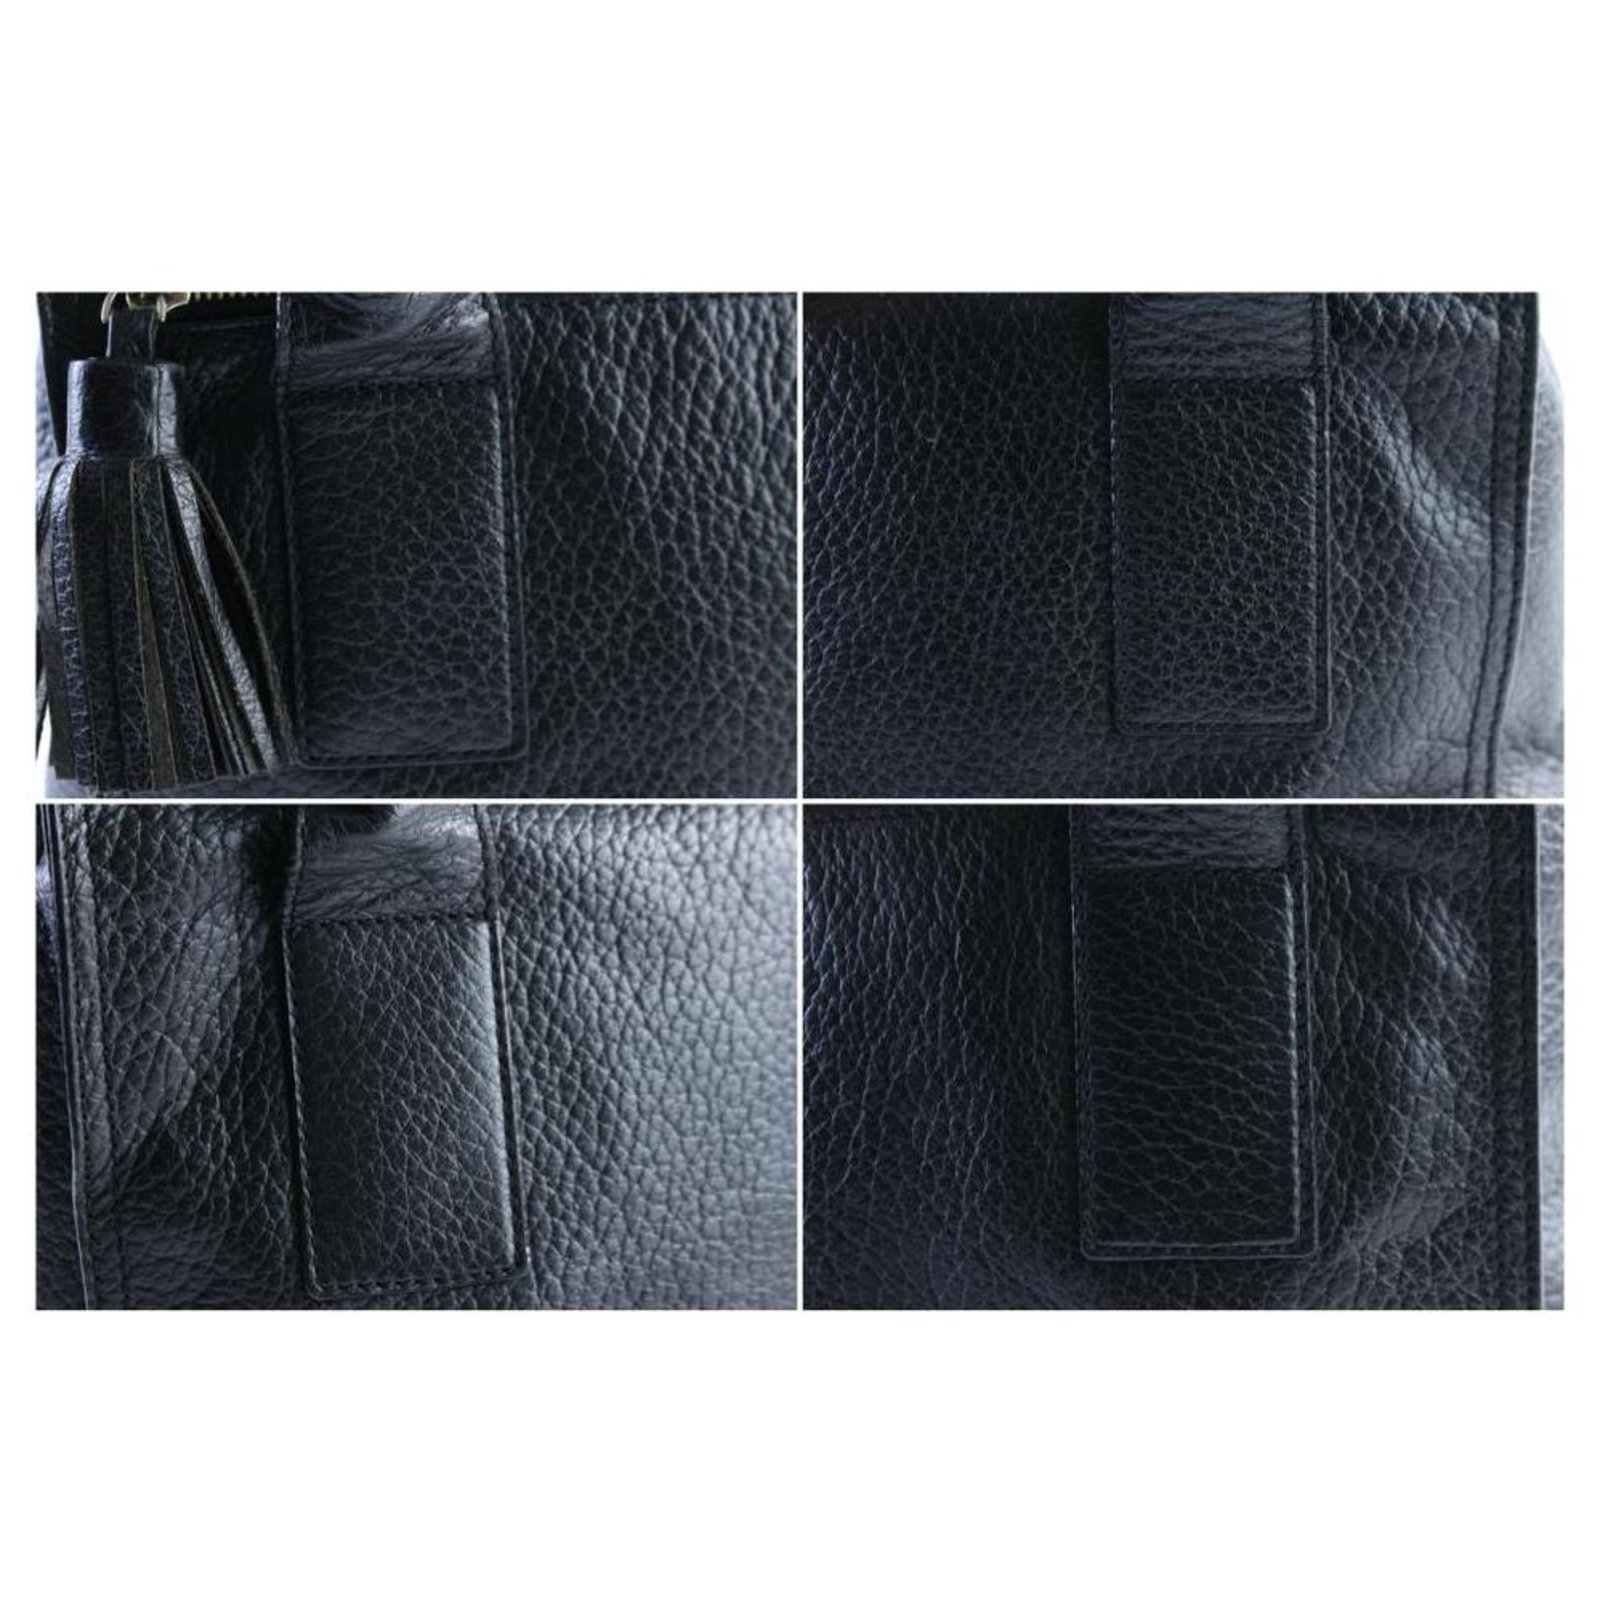 Kate Spade Black Patent Leather Tote Bag 245kp56